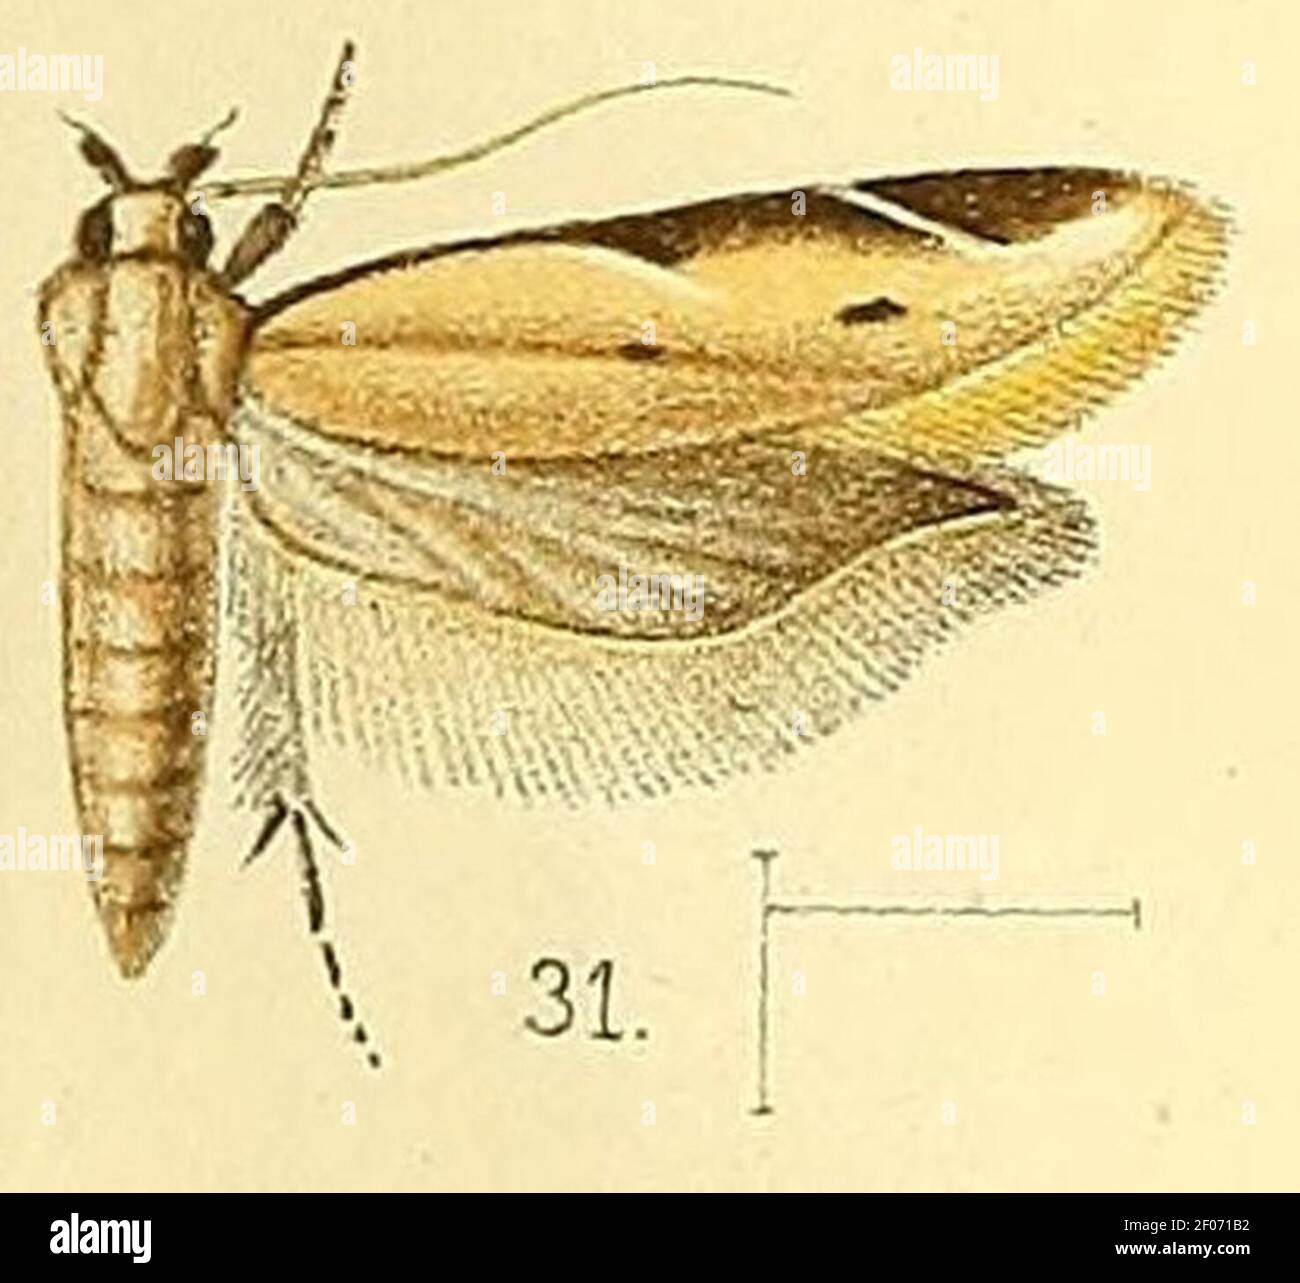 Pl.4-fig.31-Mesophleps palpigera (Walsingham, 1891) (Gelechia). Stock Photo